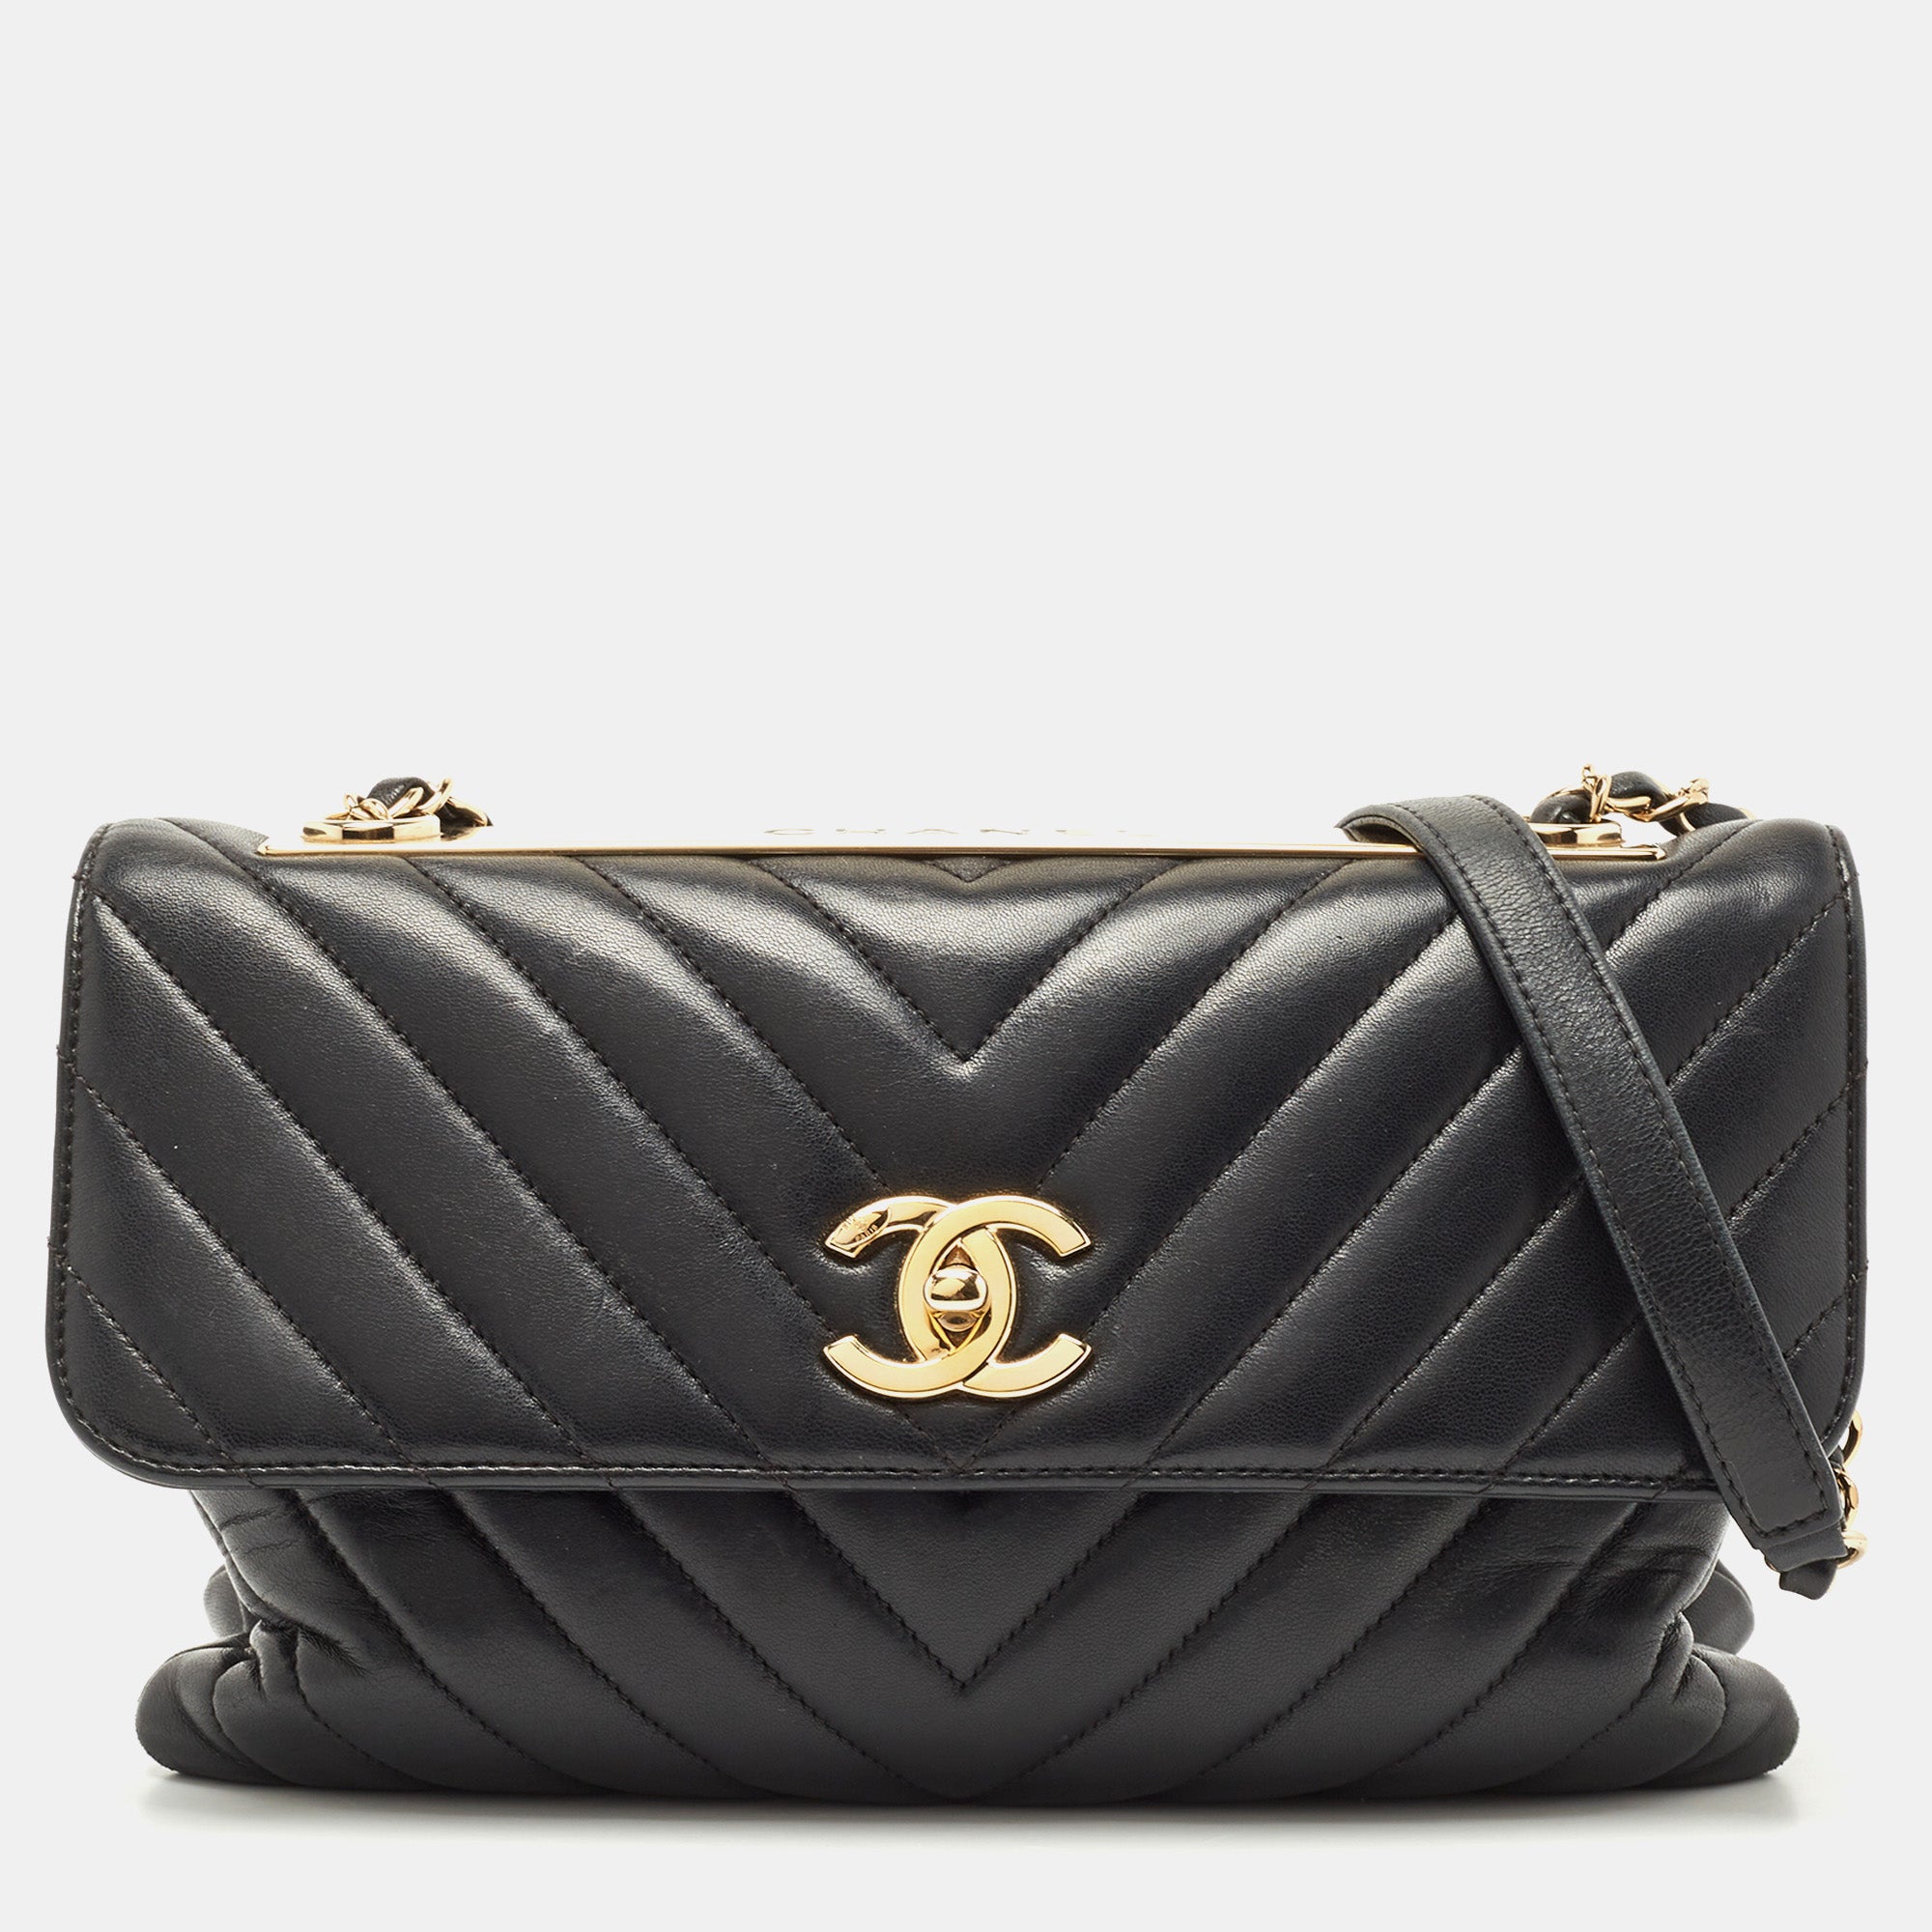 CHANEL Black Chevron Leather Trendy CC Flap Bag